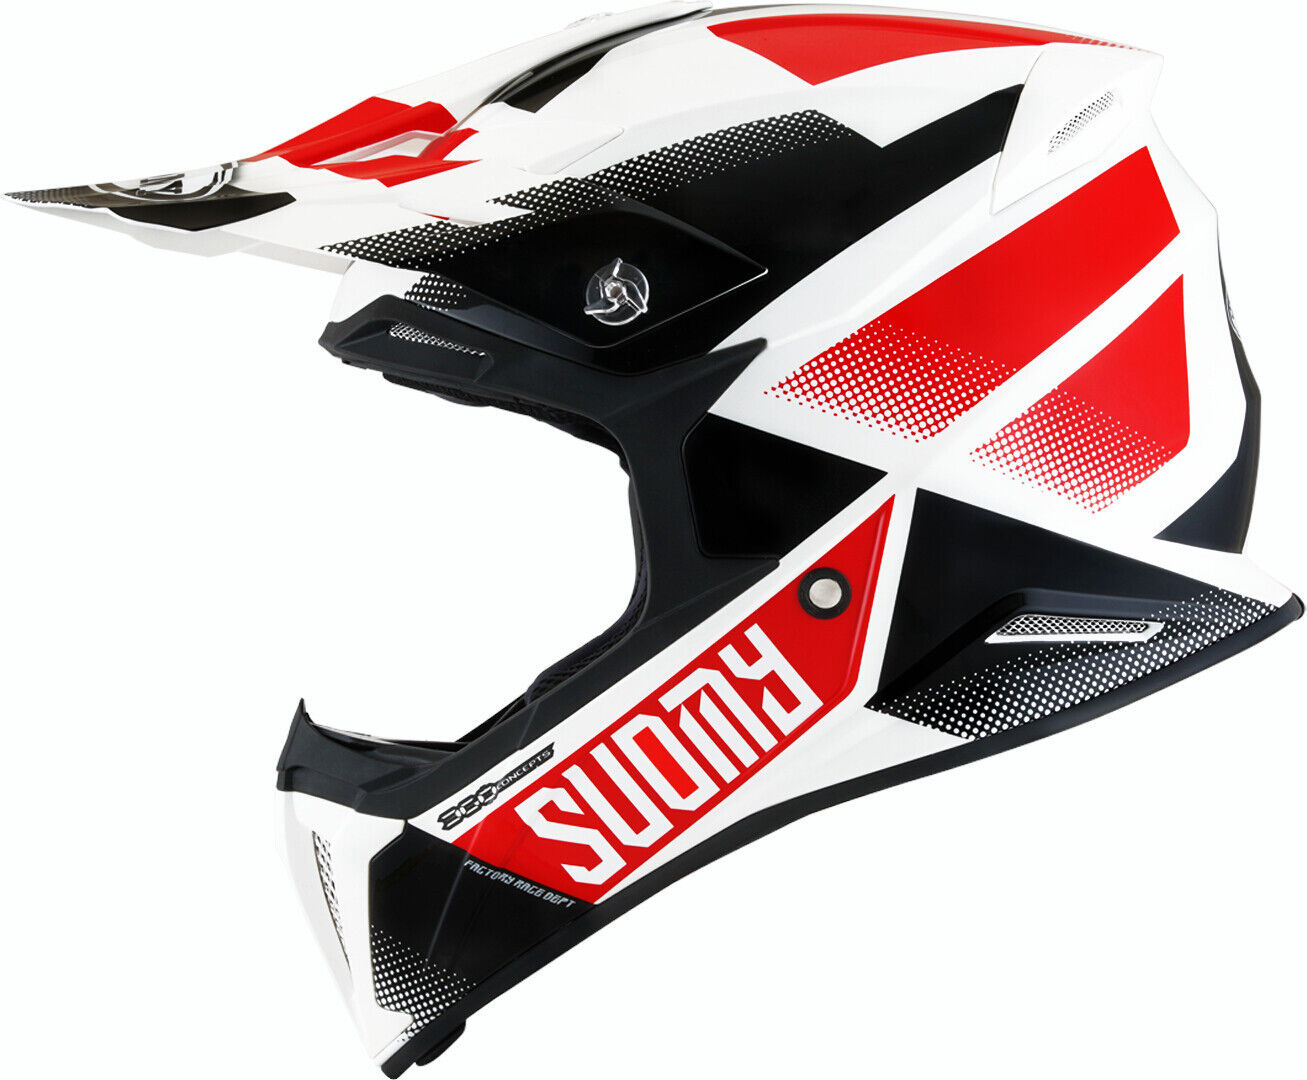 Suomy X-Wing Grip Casco de Motocross - Negro Blanco Rojo (XS)